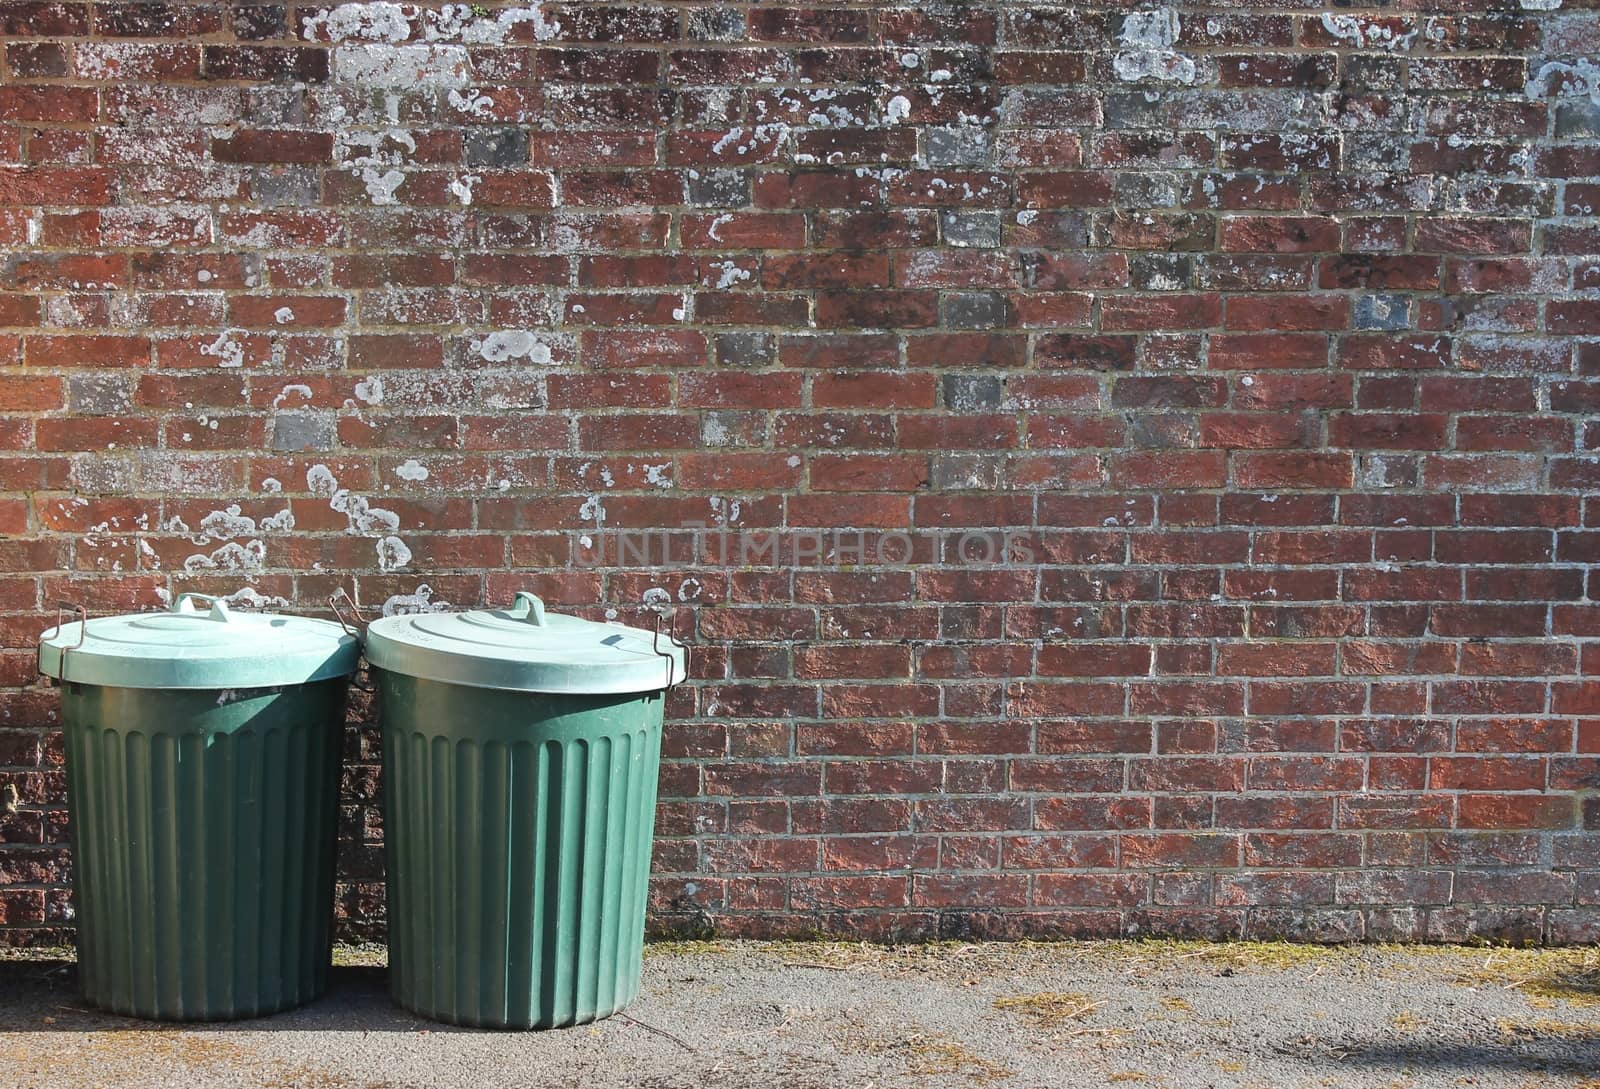 trash can dustbins outside against brick wall